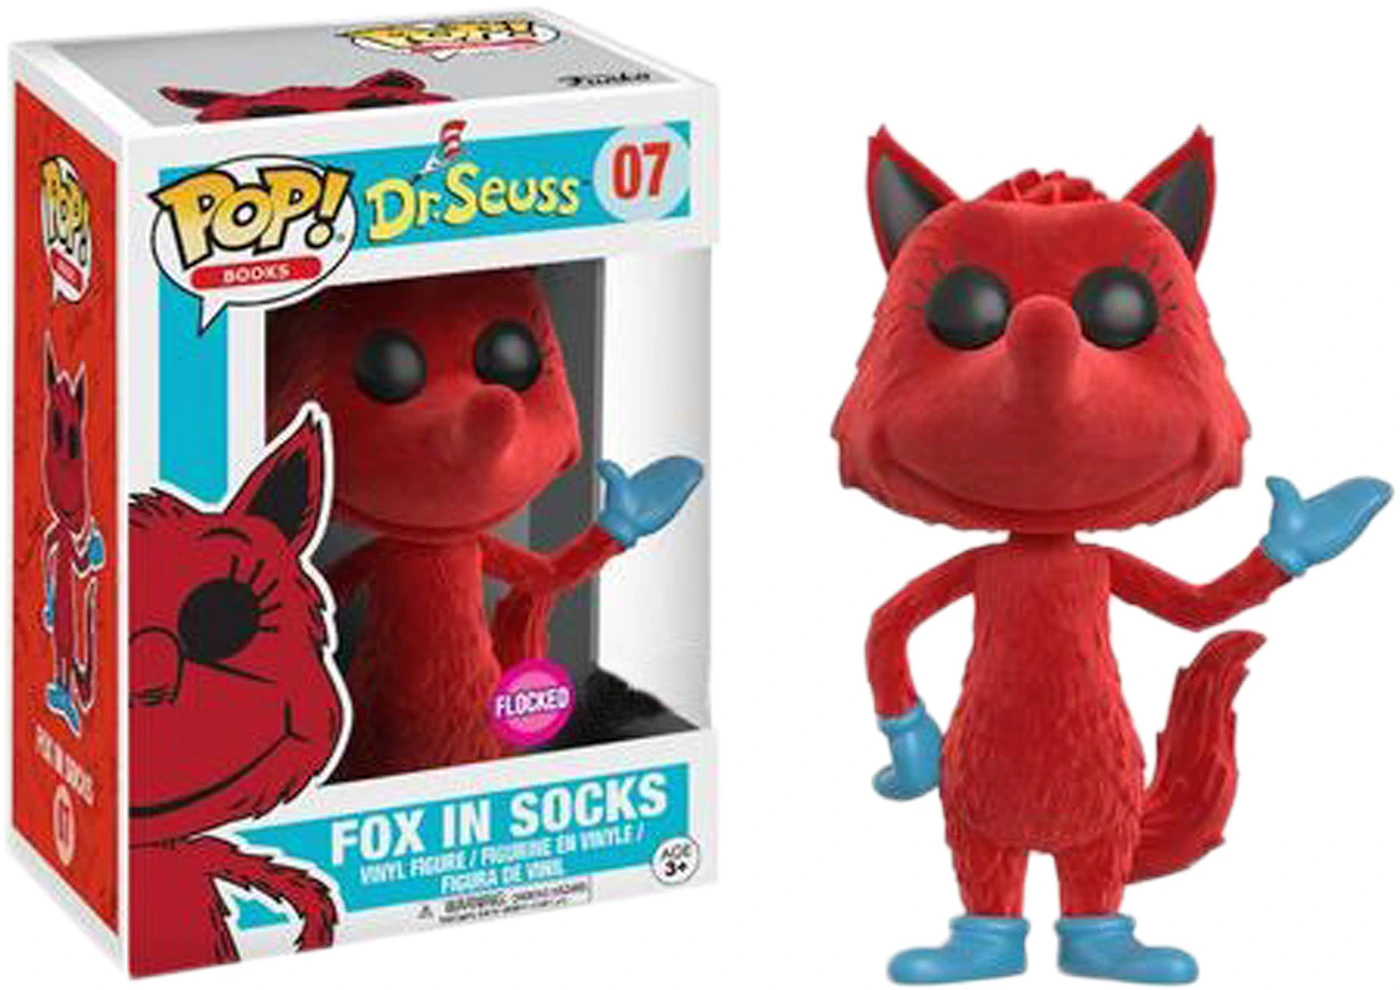 Oh badning Springboard Funko Pop! Books Dr. Seuss Fox in Socks (Flocked) GameStop Exclusive Figure  #07 - US